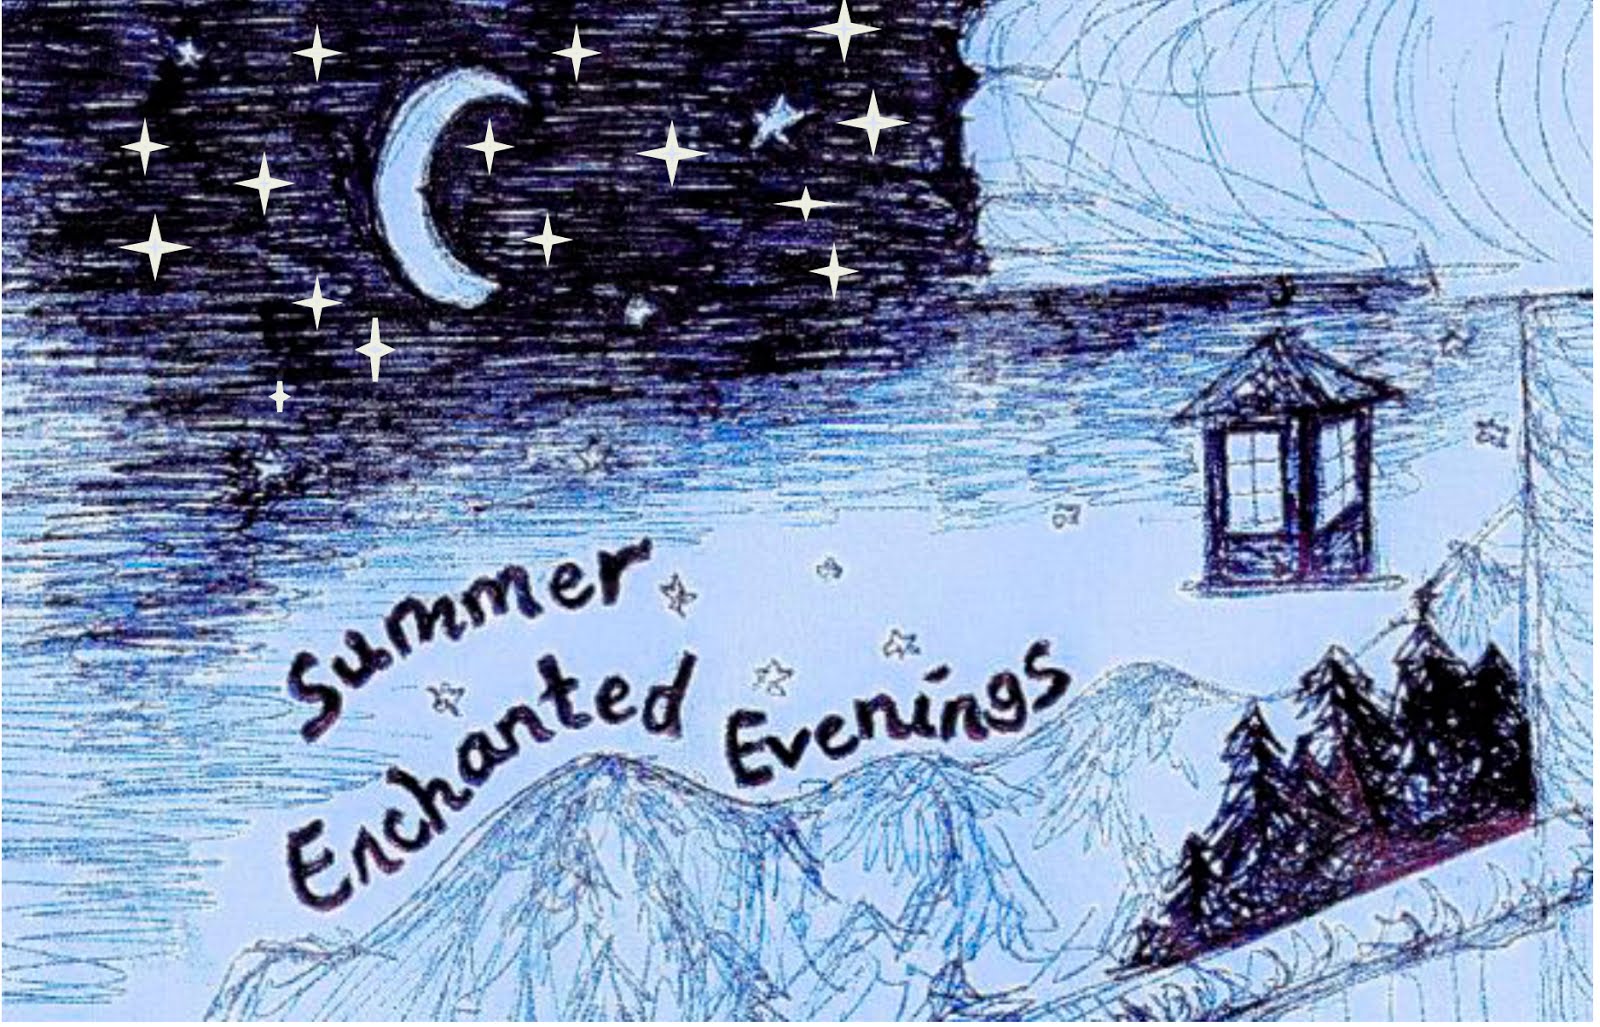 Summer Enchanted Evenings